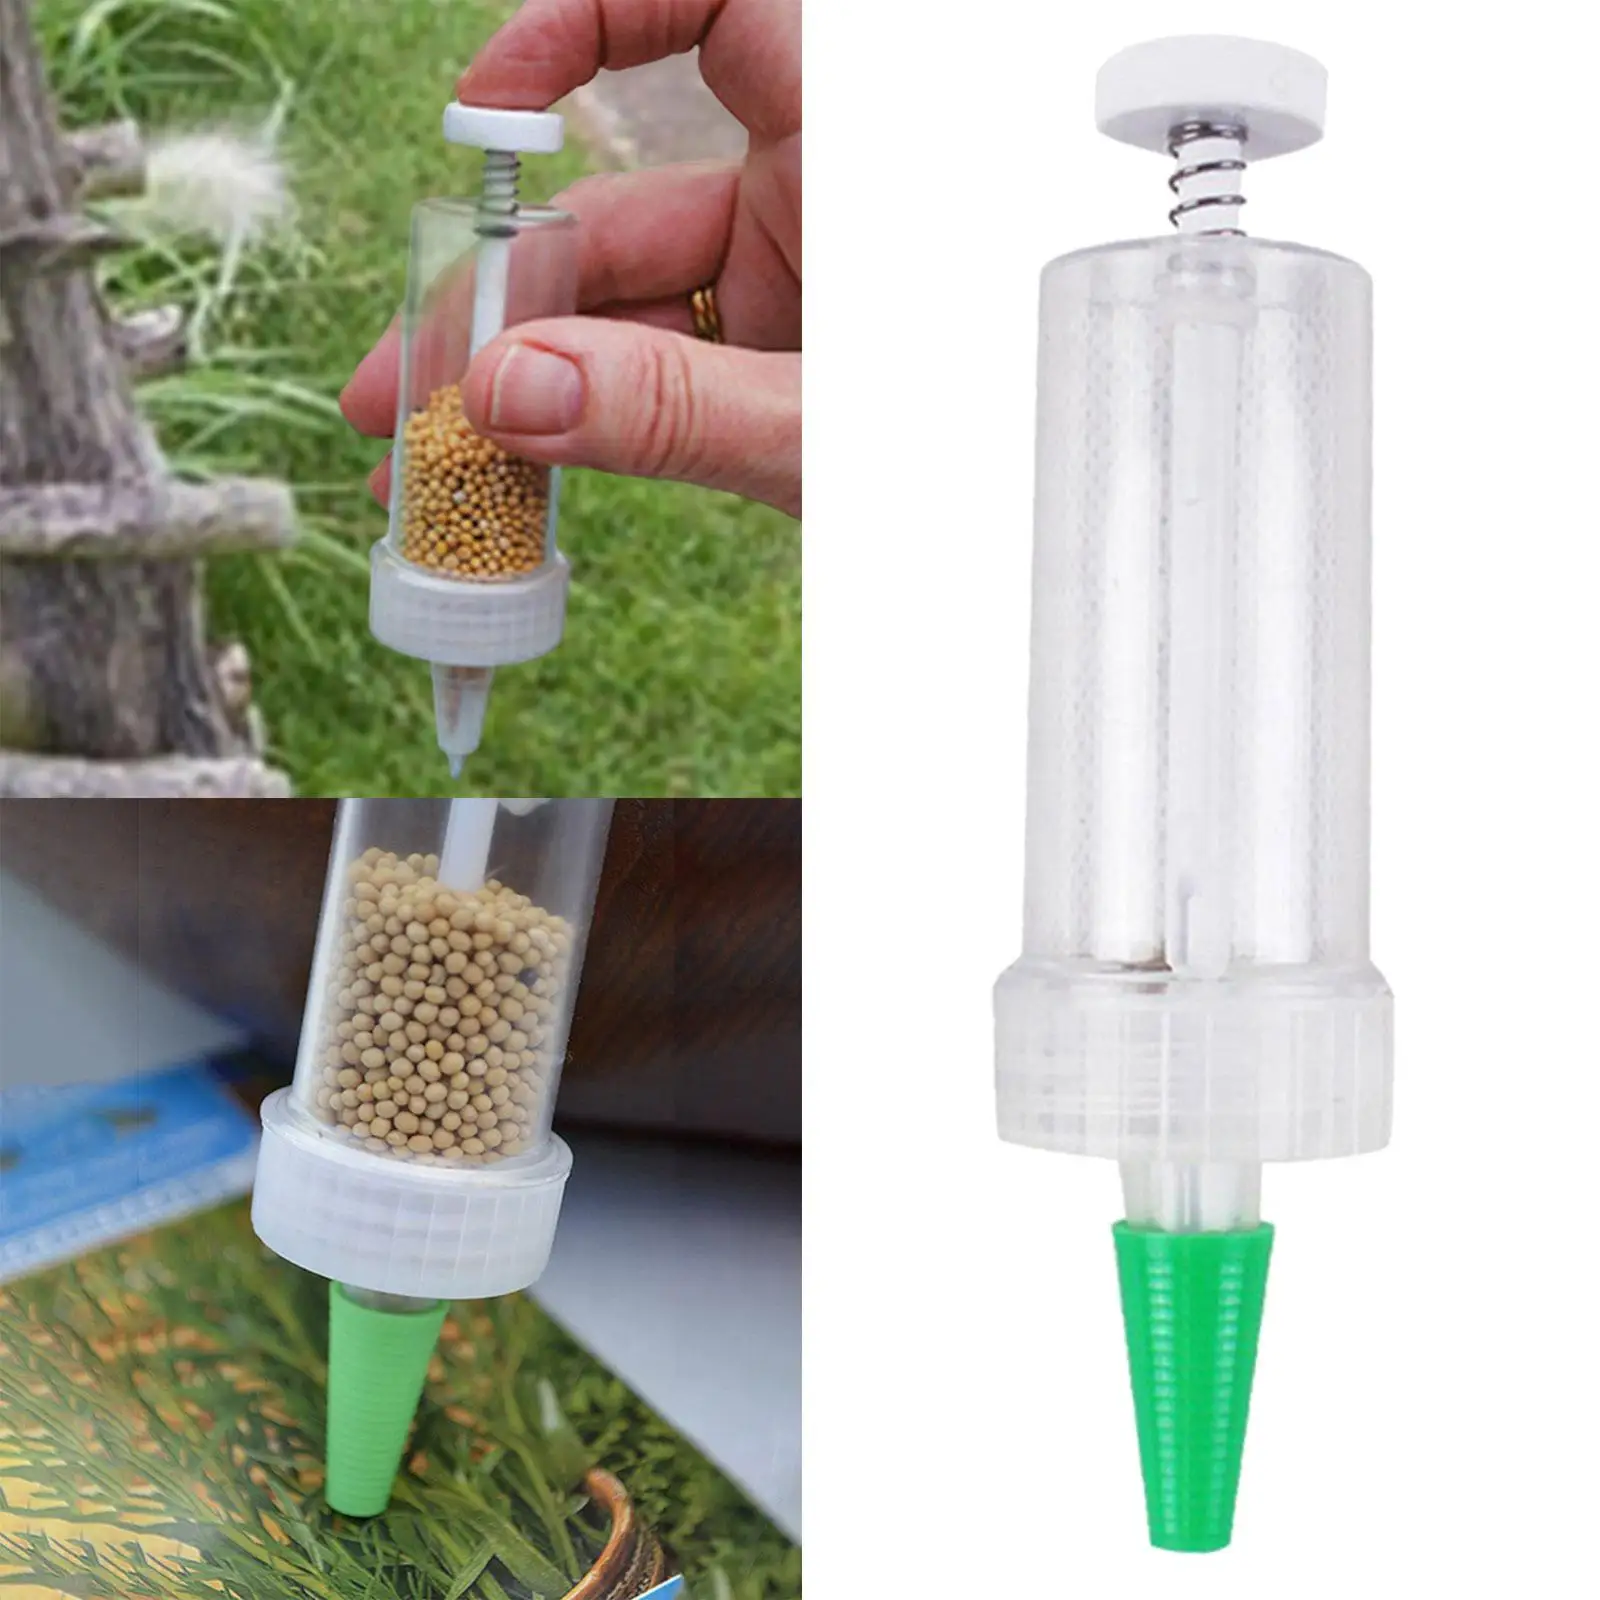 Sowing Seed Dispenser Hand Tool,Handheld Garden Seeder Sower Planter Set for Small Seeds of Flowers, Vegetables